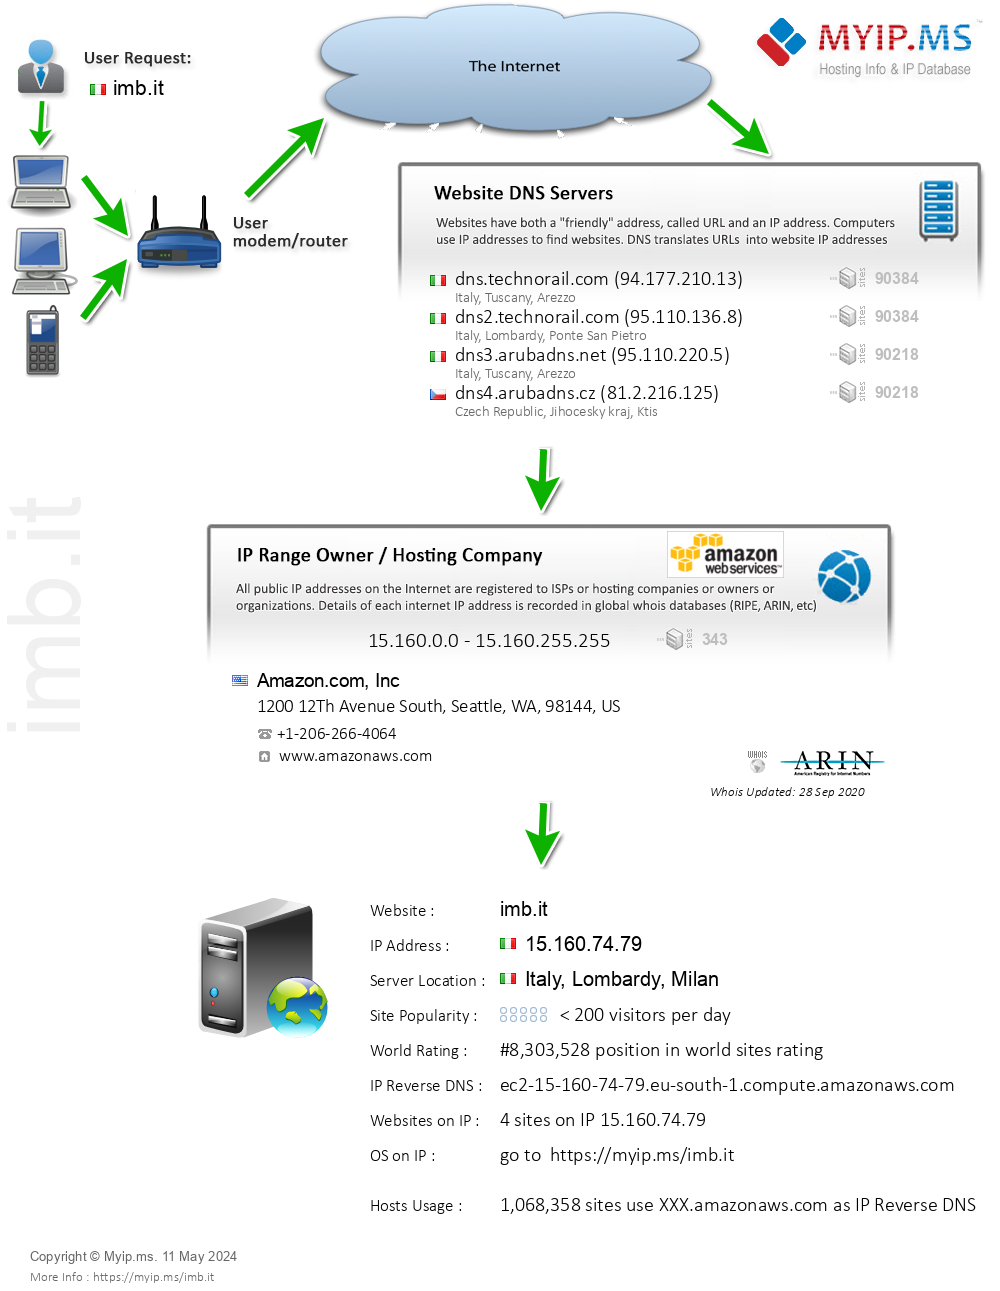 Imb.it - Website Hosting Visual IP Diagram